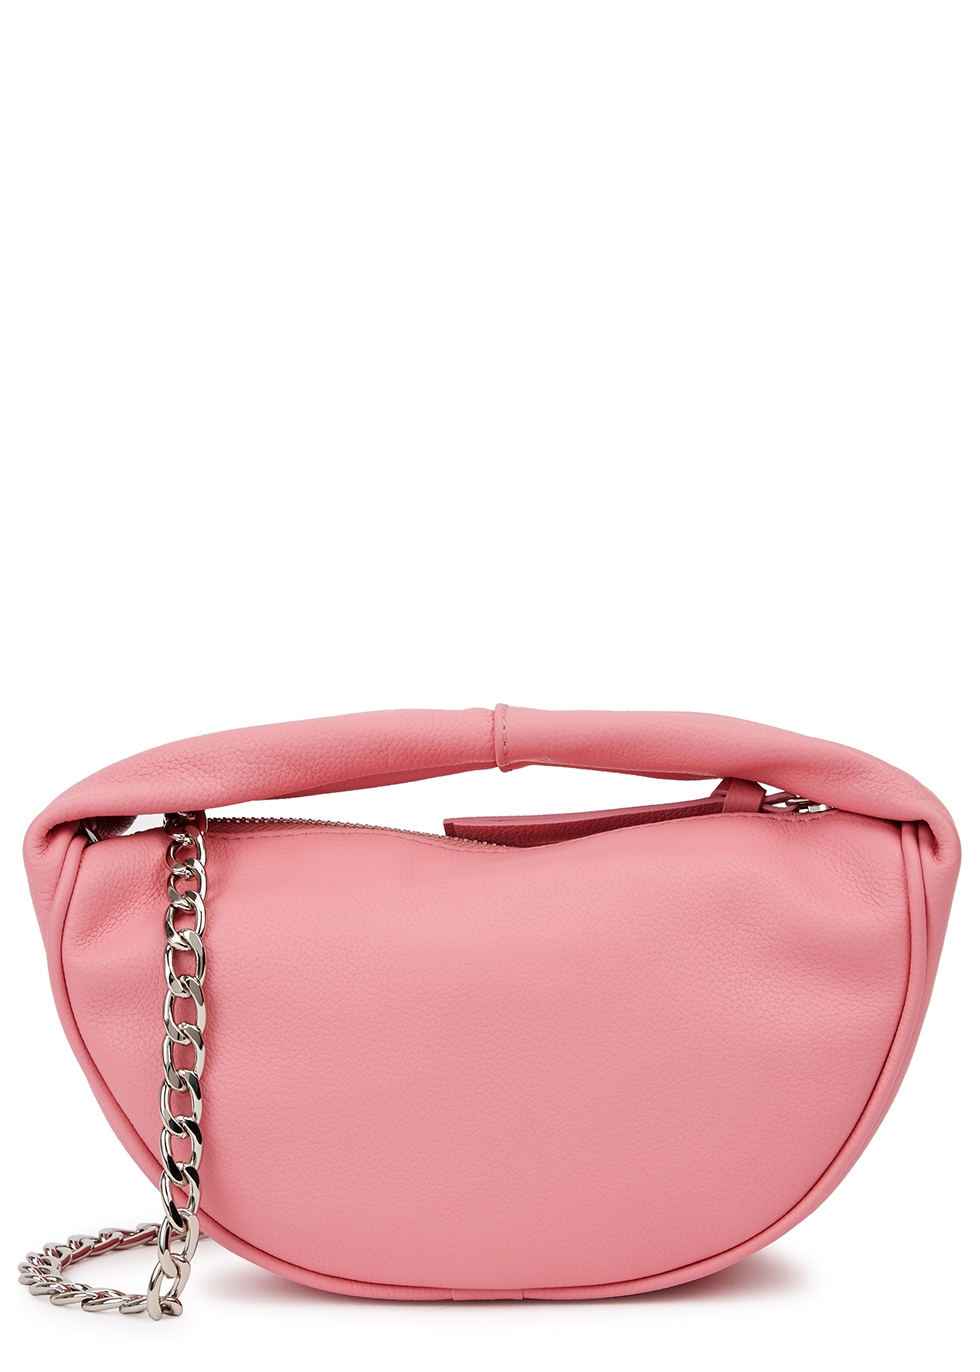 Baby Cush pink leather top handle bag